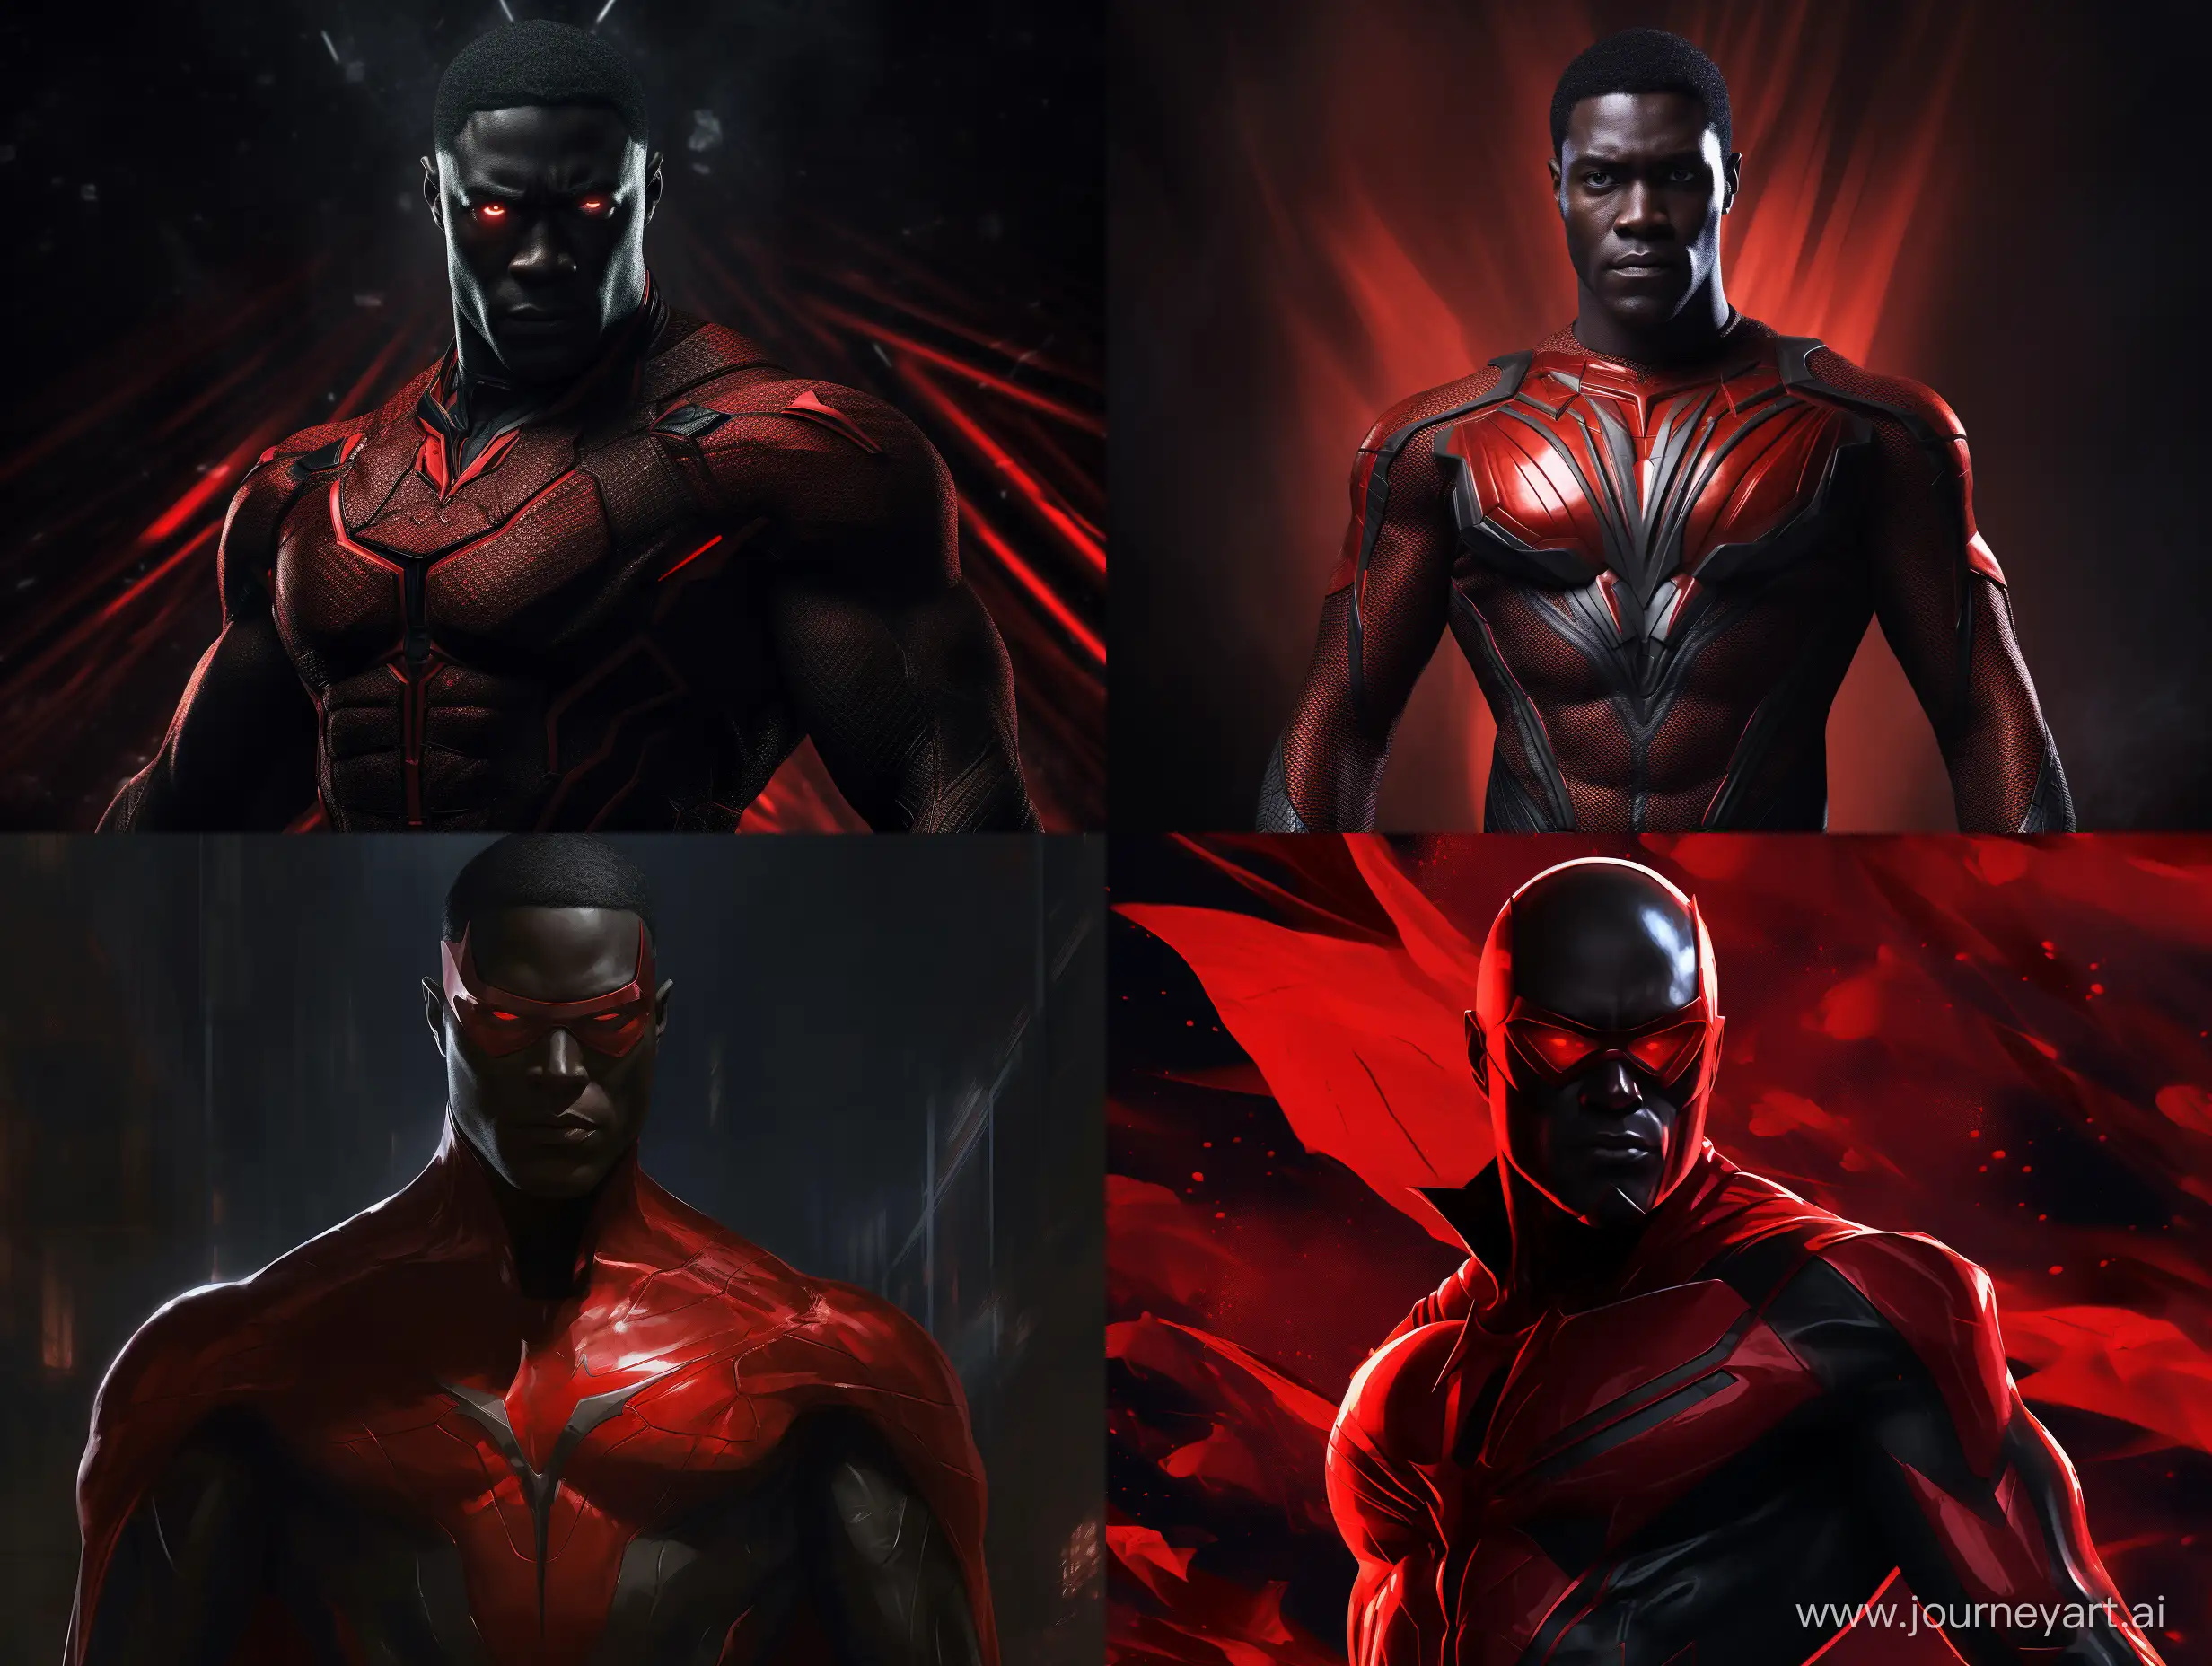 Dynamic-Black-Superhero-in-Striking-Red-Costume